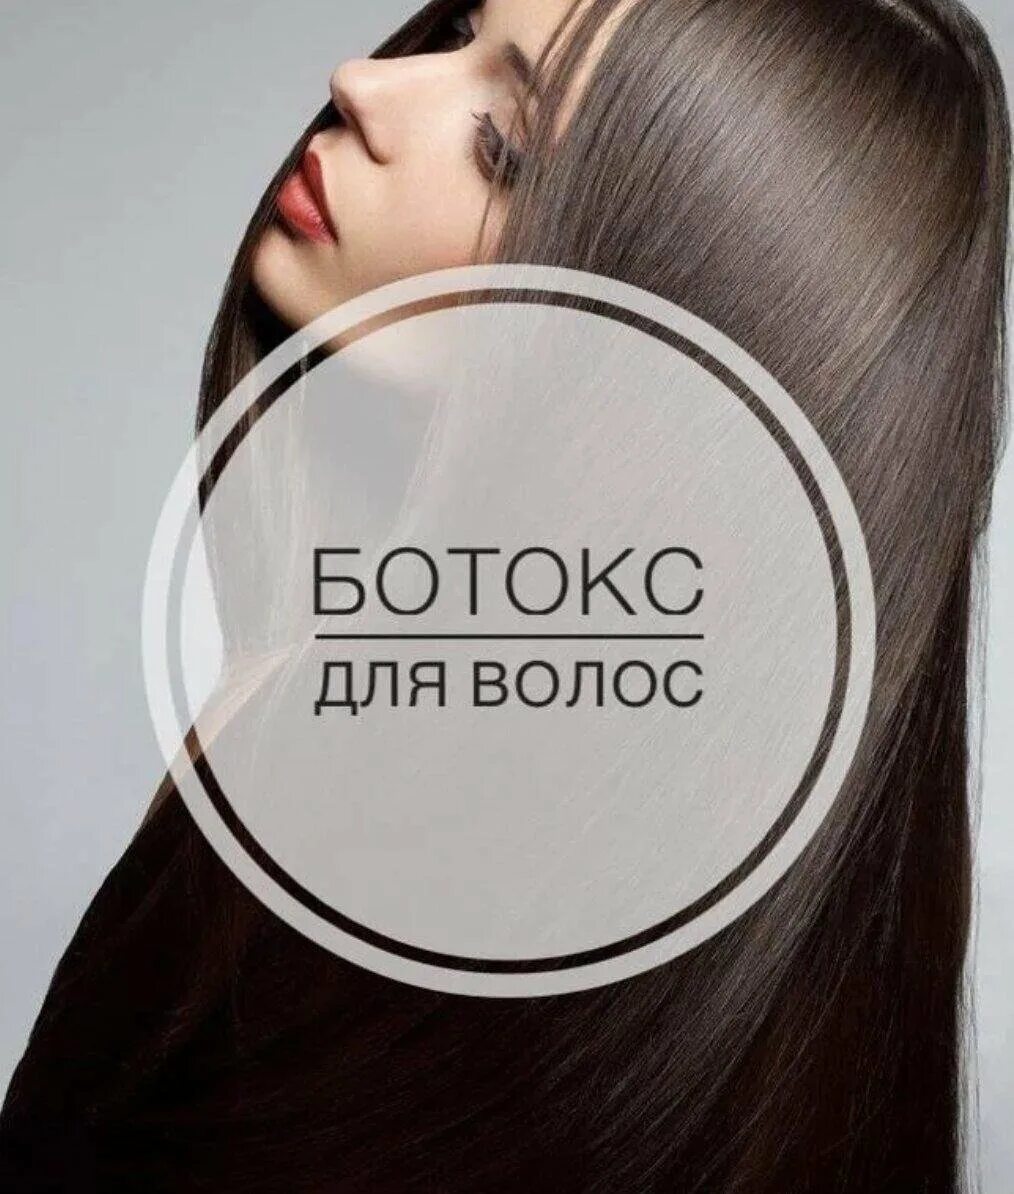 Ботокс для волос. Битекс для волос. Волосы ботокс волос. Ботокс для волос реклама. Мастер кератин ботокс